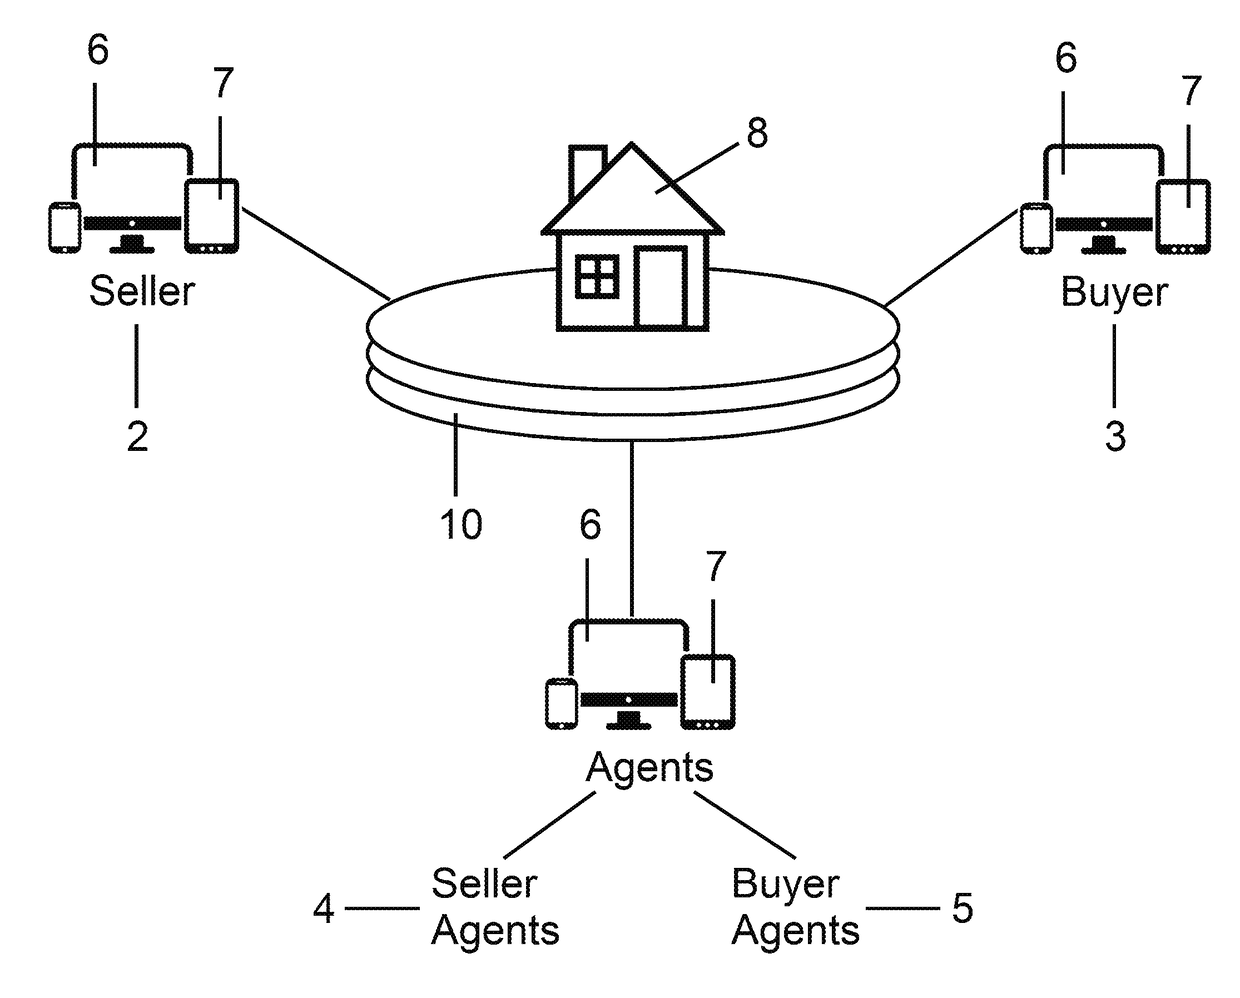 System for facilitating real estate transaction